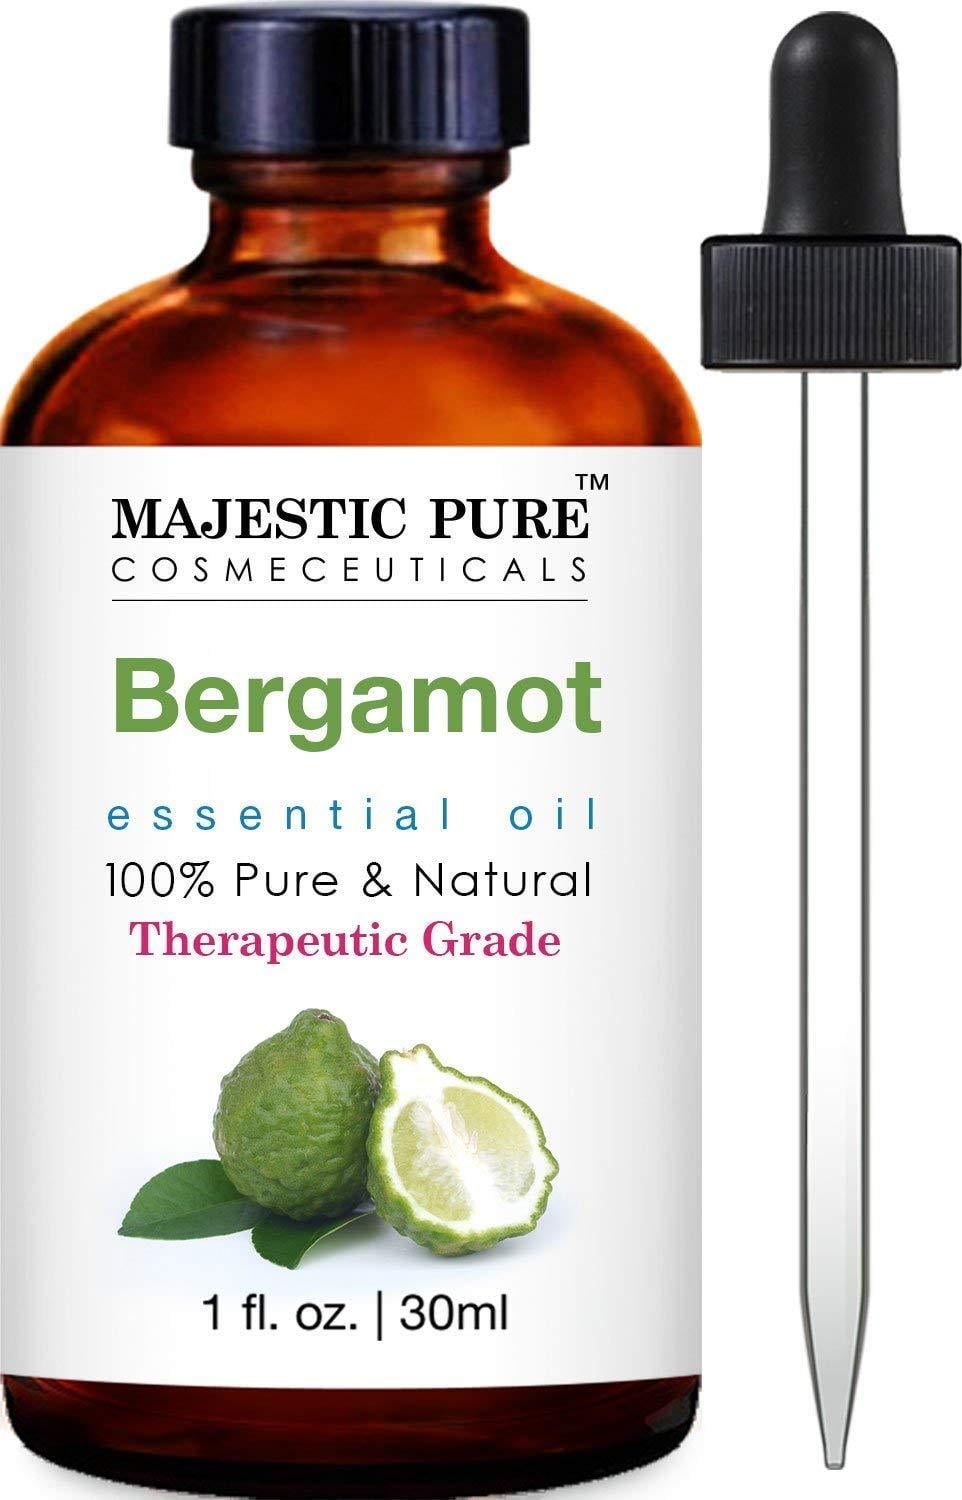 US Organic Bergamot Essential Oil, 100% Pure Certified USDA Organic – US  Organic